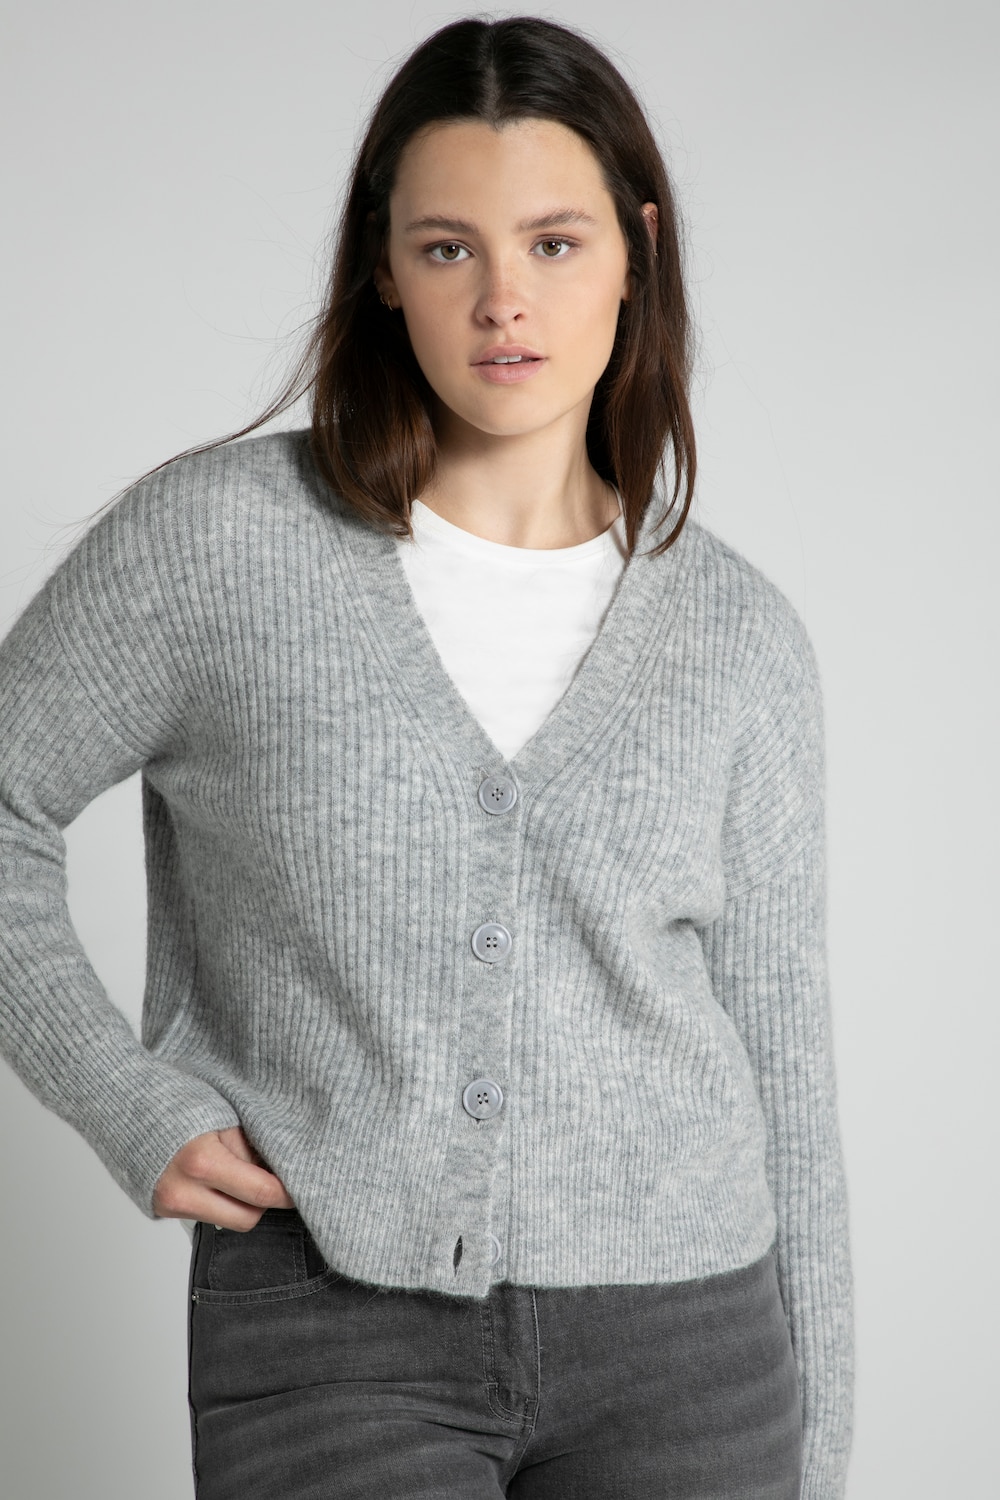 Plus Size Oversized Premium Cardigan, Woman, grey, size: 16/18, synthetic fibers/wool, Studio Untold